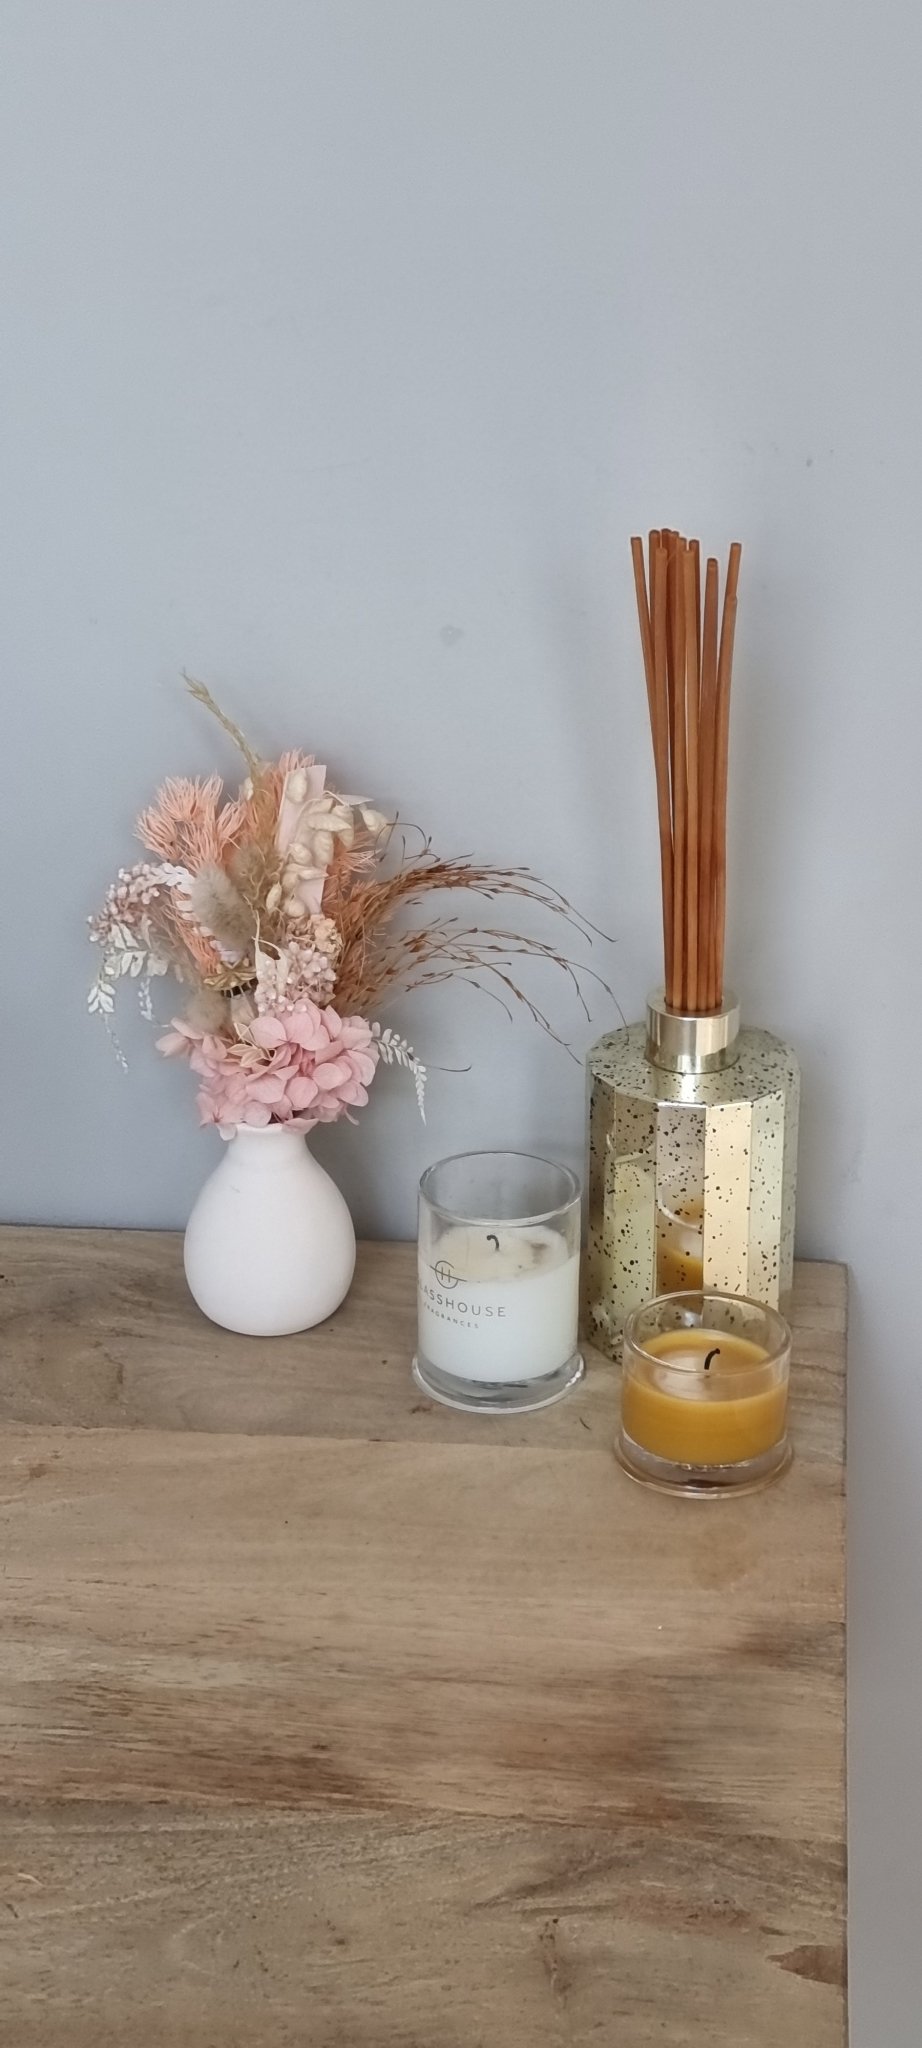 Dried floral arrangement in vase - Exquisite Laser Clinic